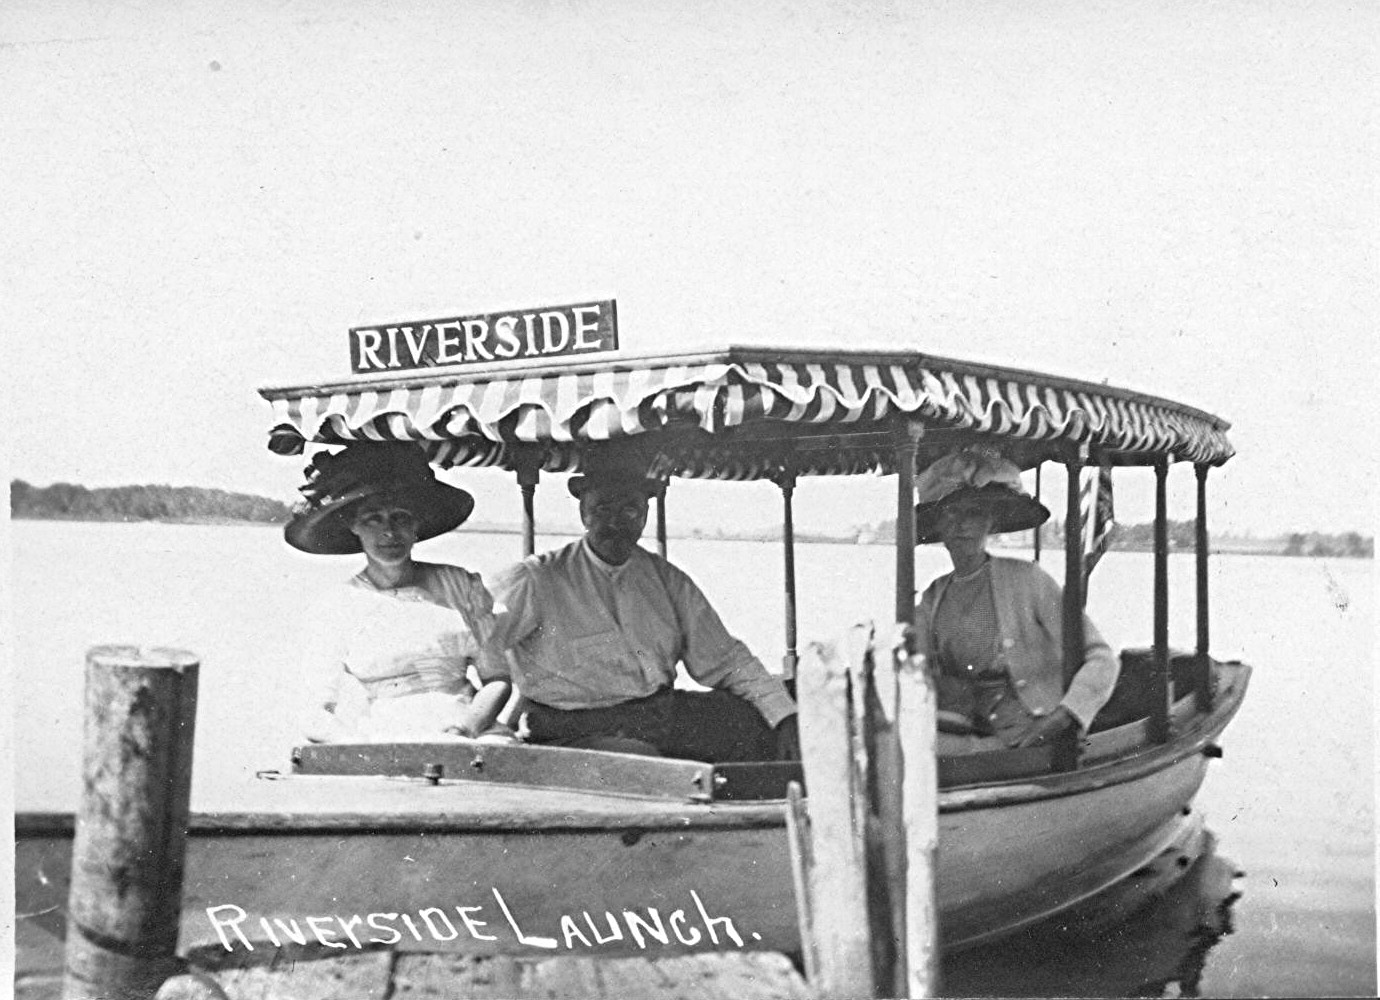 Riverside Launch